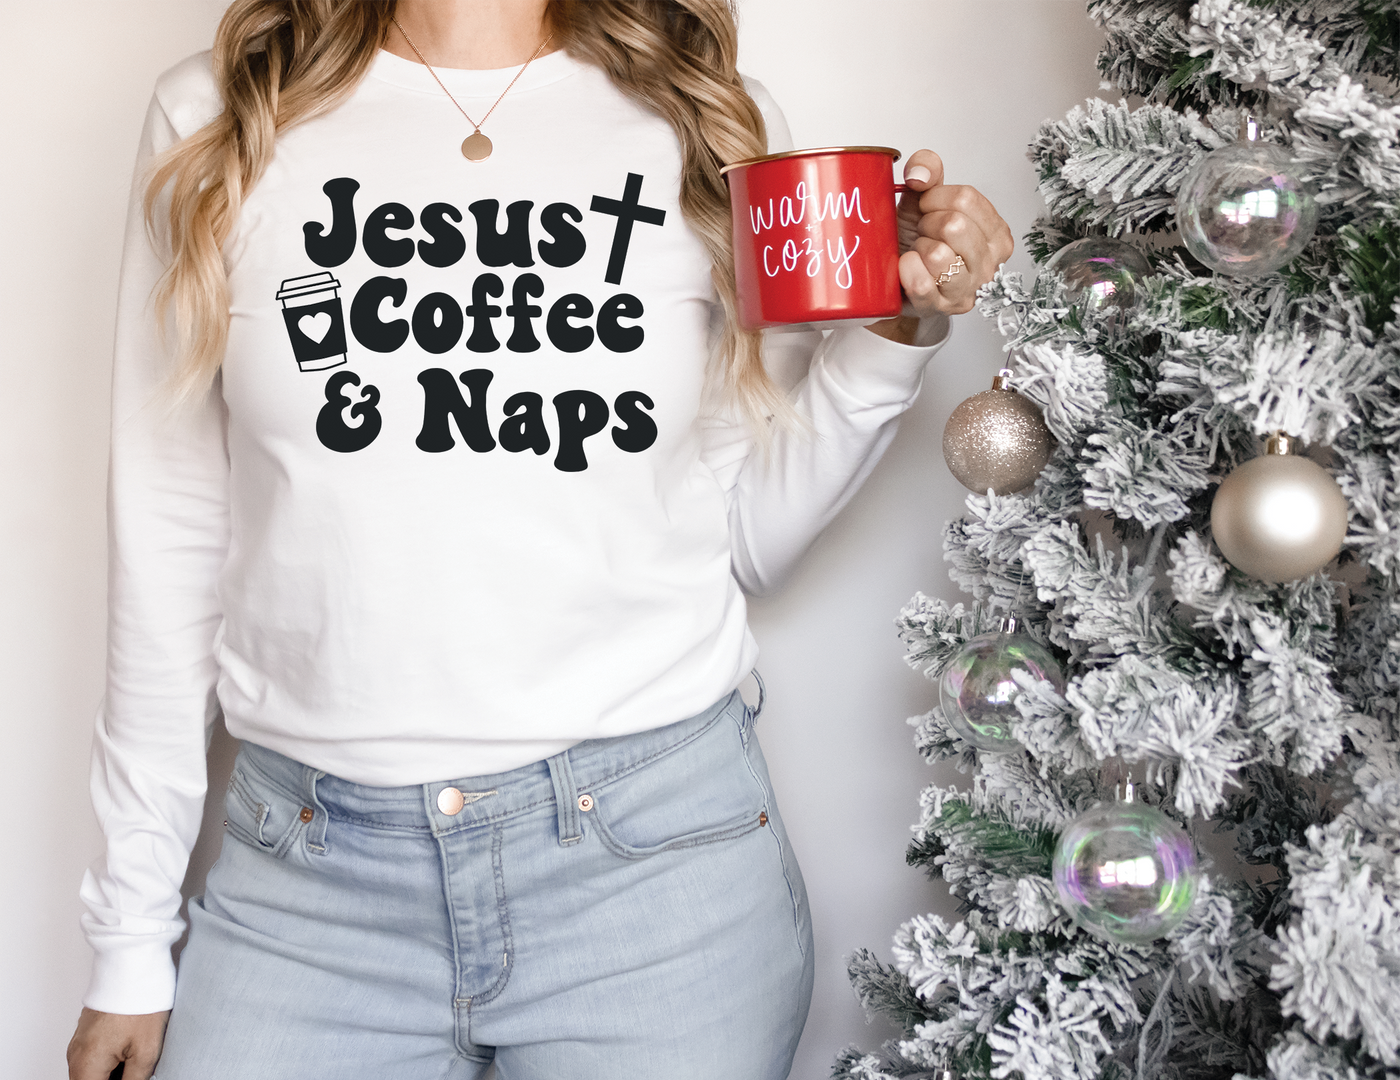 Jesus coffee & naps